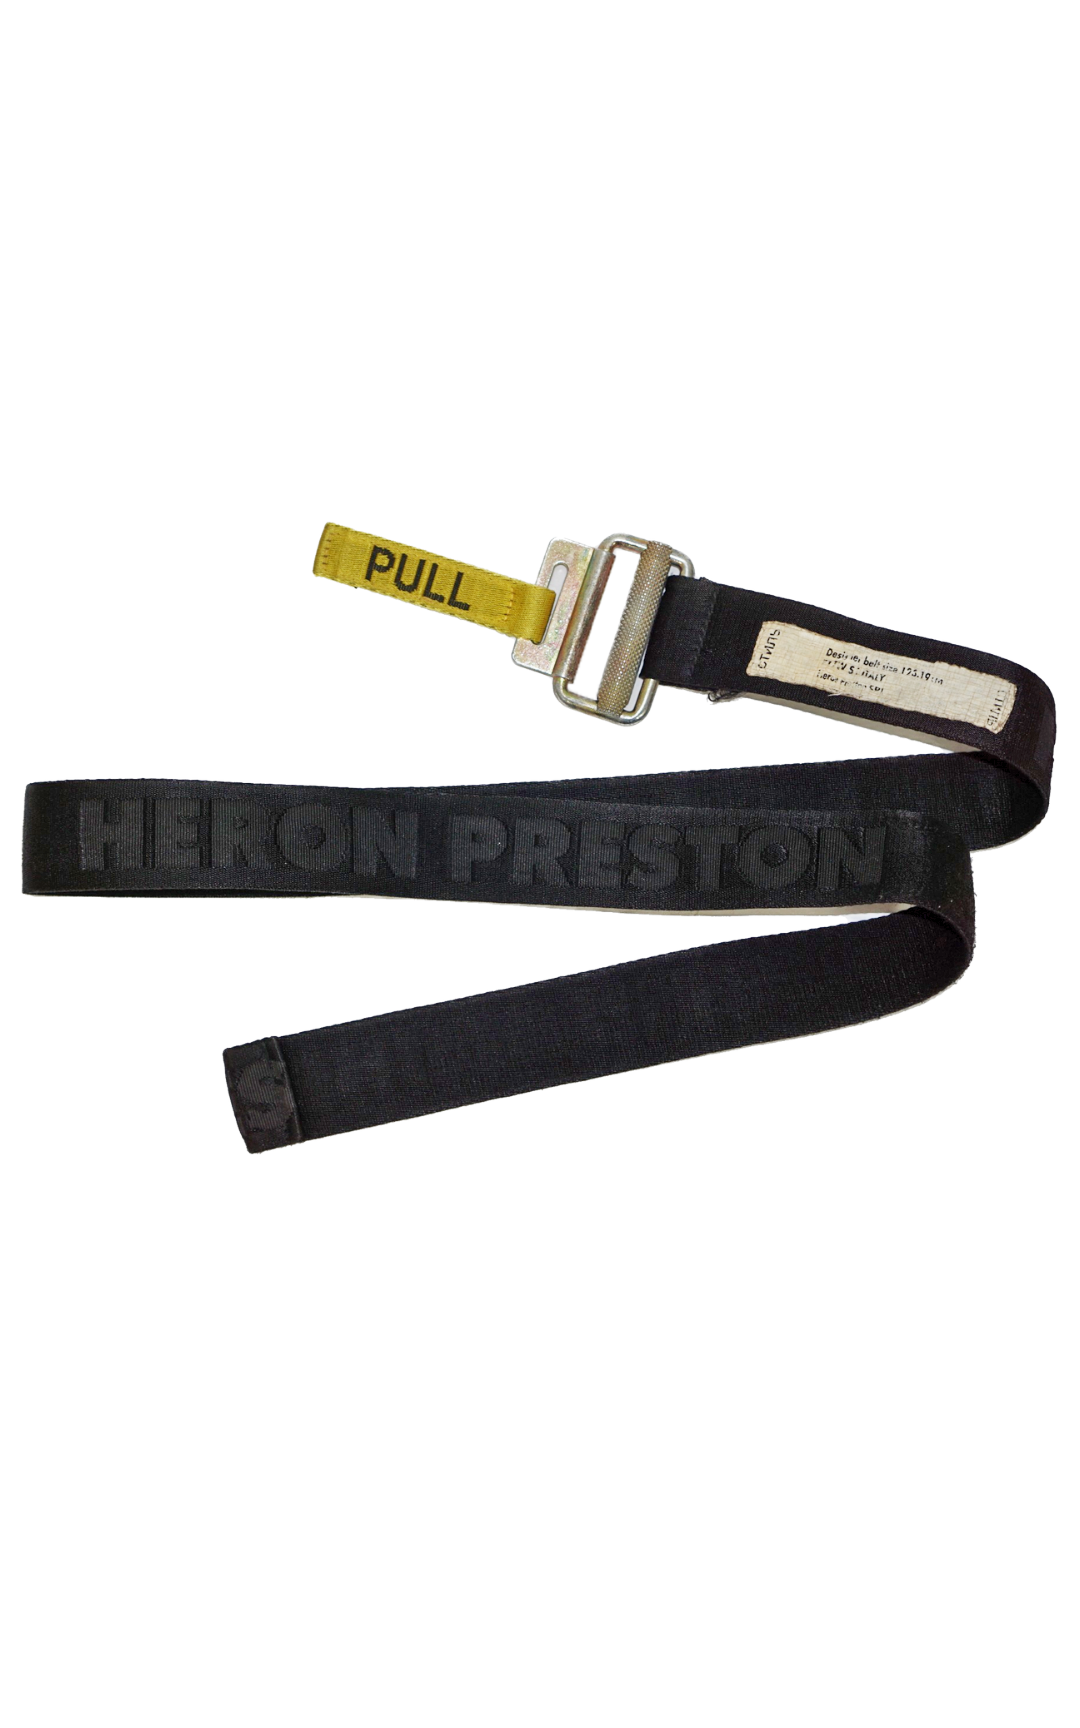 HERON PRESTON Logo Pull Black Belt One Size resellum